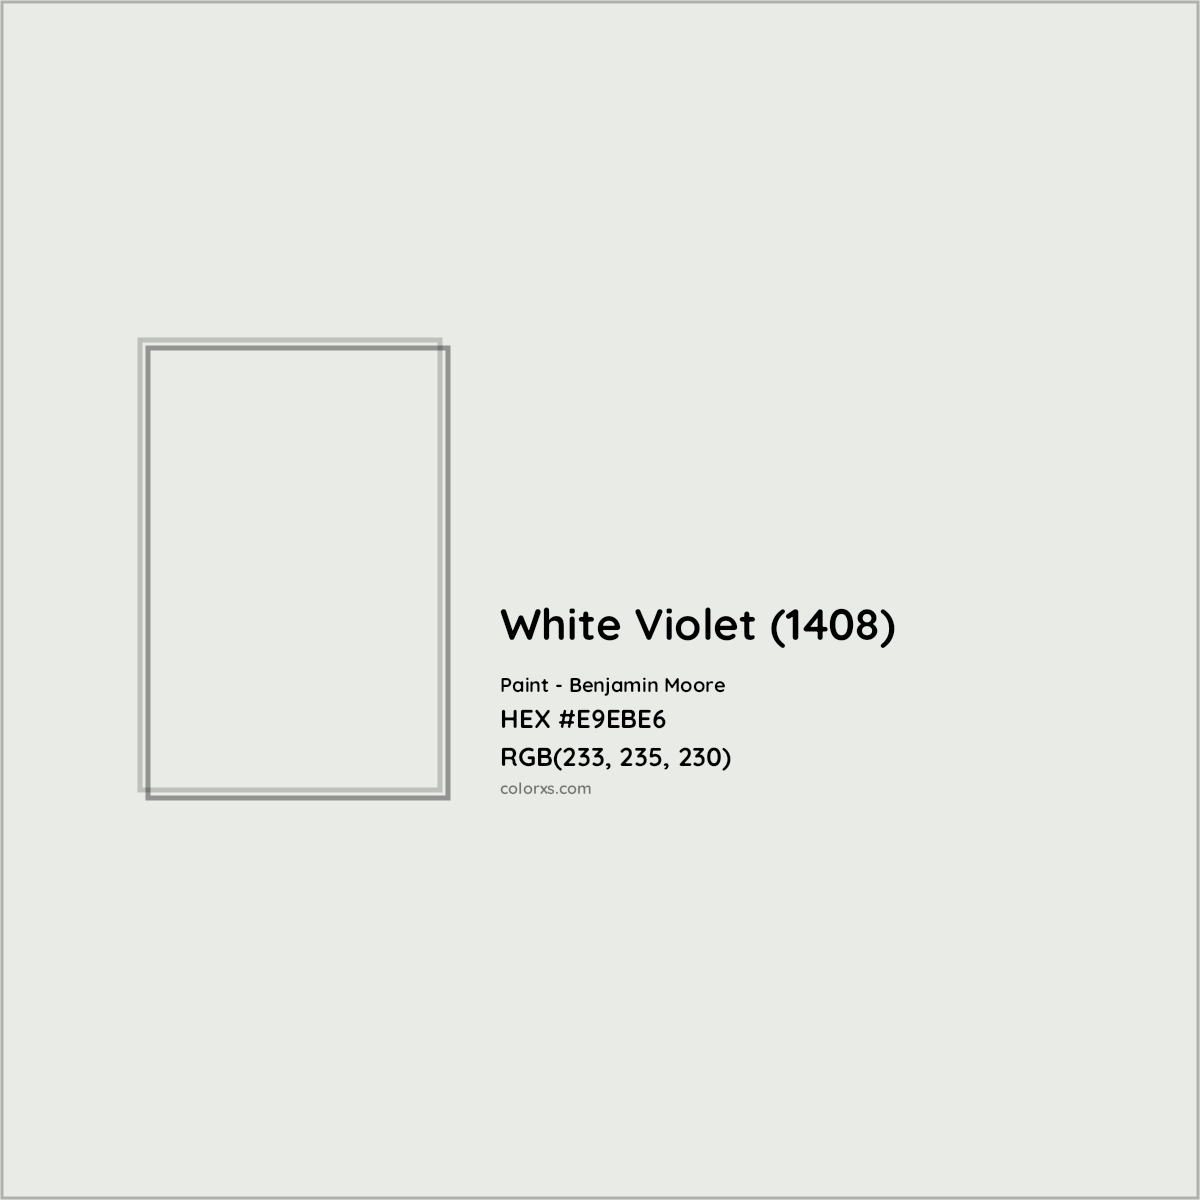 HEX #E9EBE6 White Violet (1408) Paint Benjamin Moore - Color Code